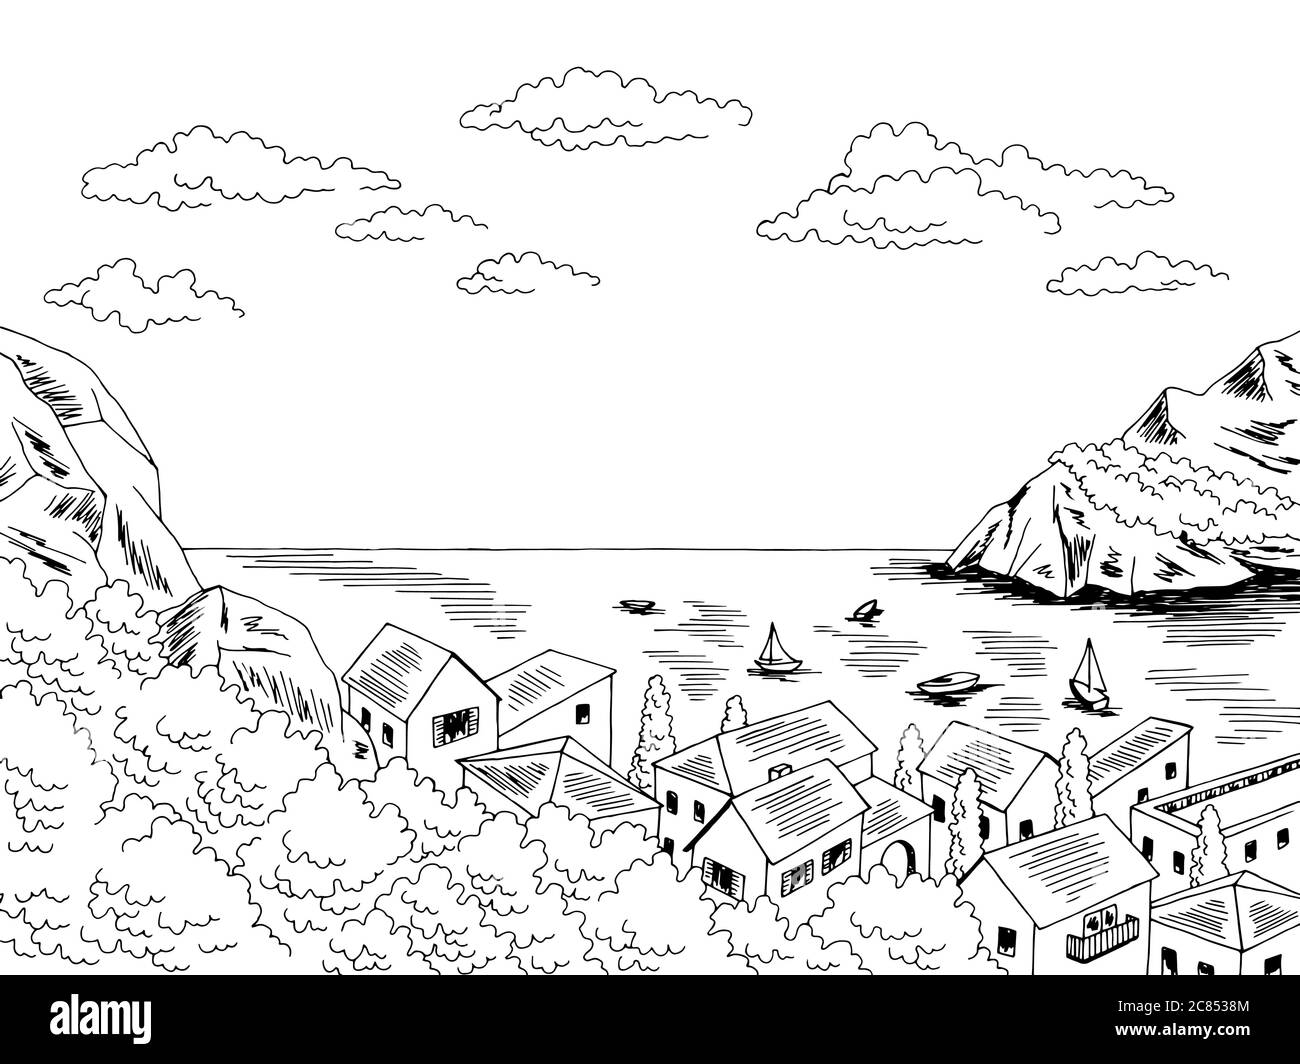 Stadt Meer Grafik schwarz weiß Bucht Landschaft Skizze Illustration Vektor Stock Vektor